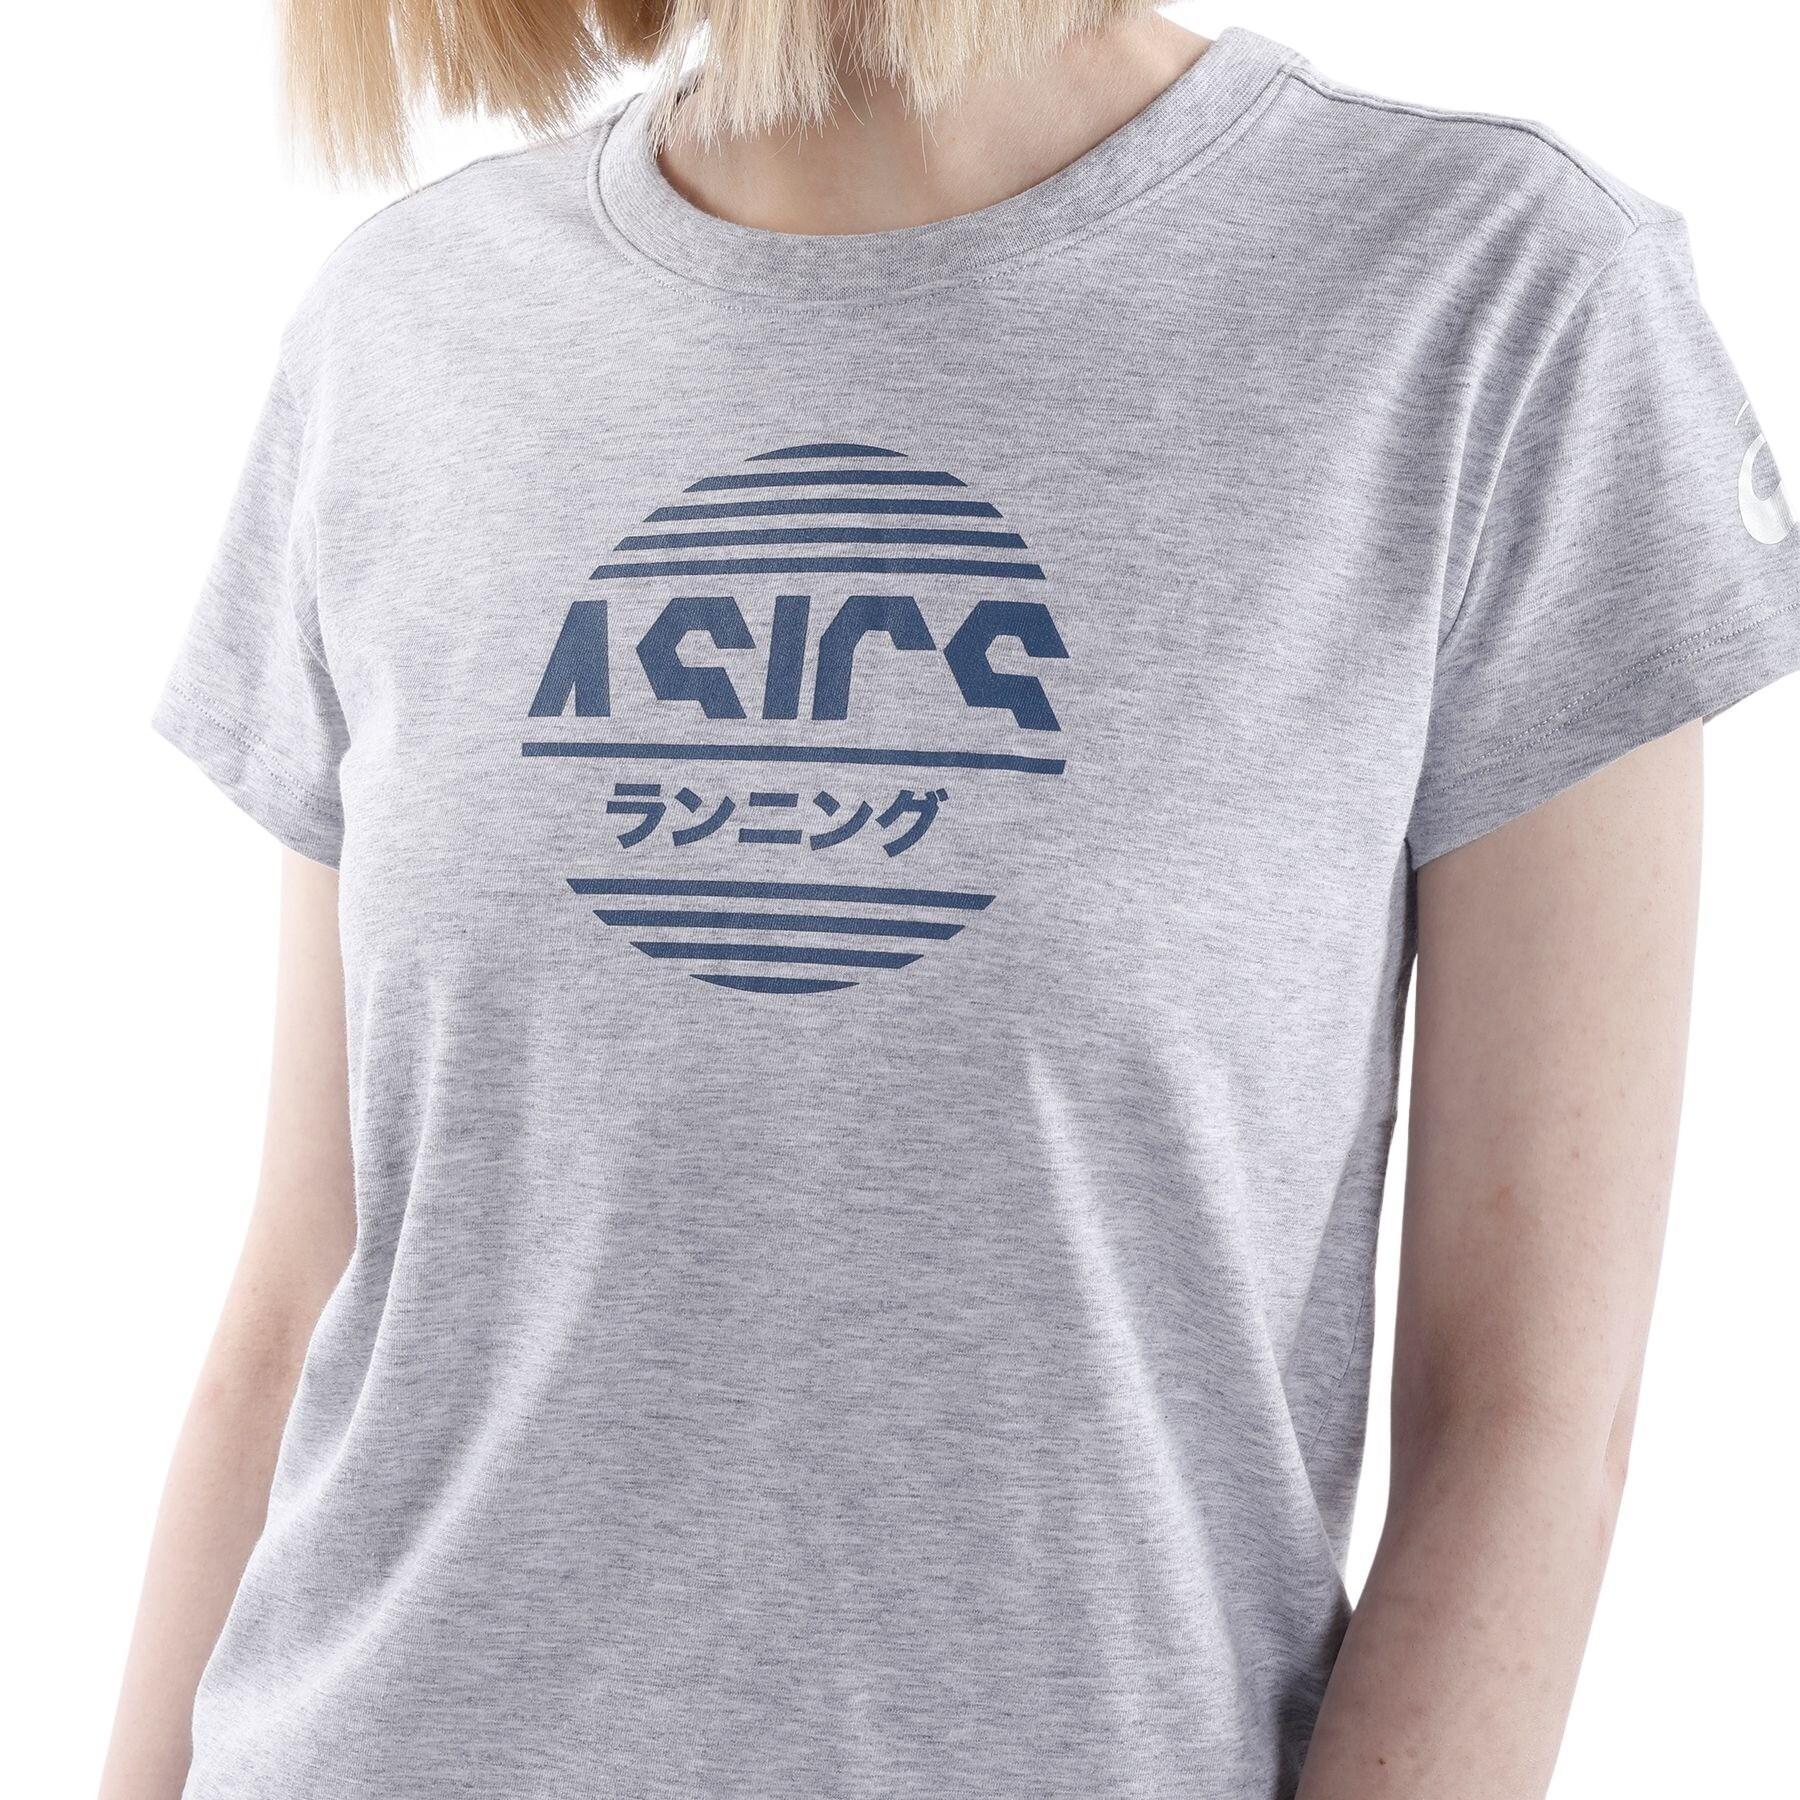 T-shirt mulher Asics Tokyo Graphic